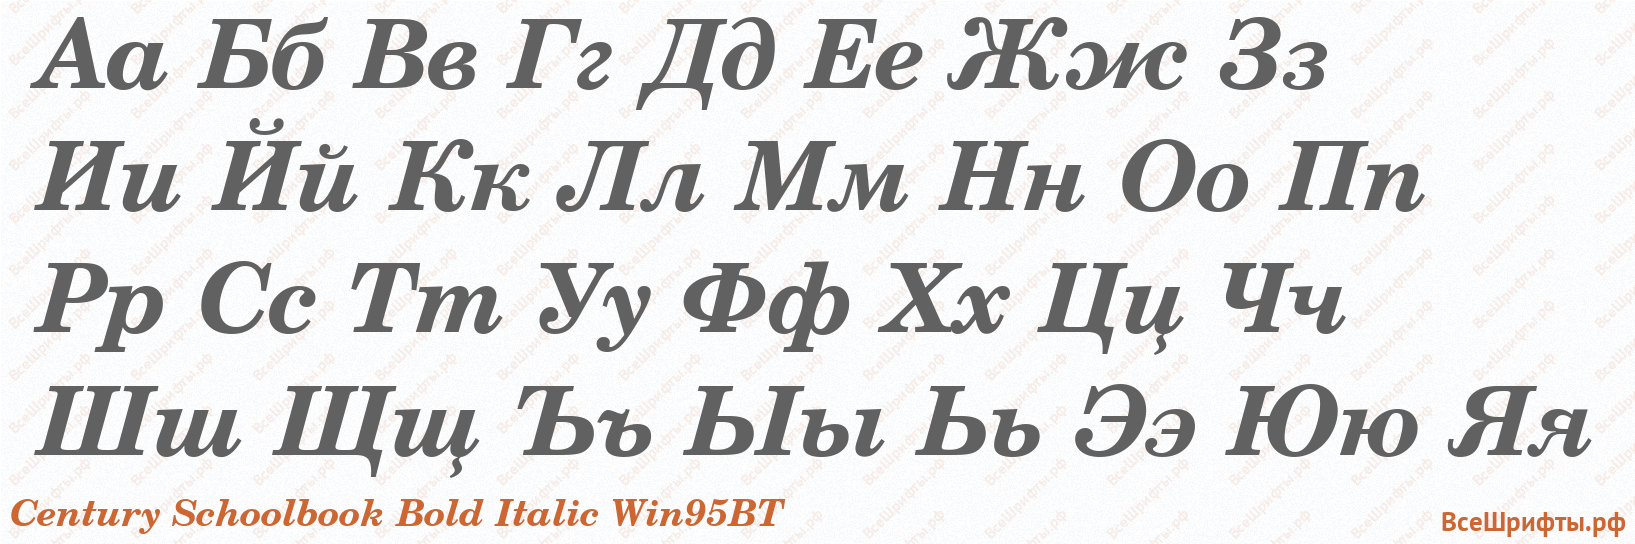 Шрифт Century Schoolbook Bold Italic Win95BT с русскими буквами